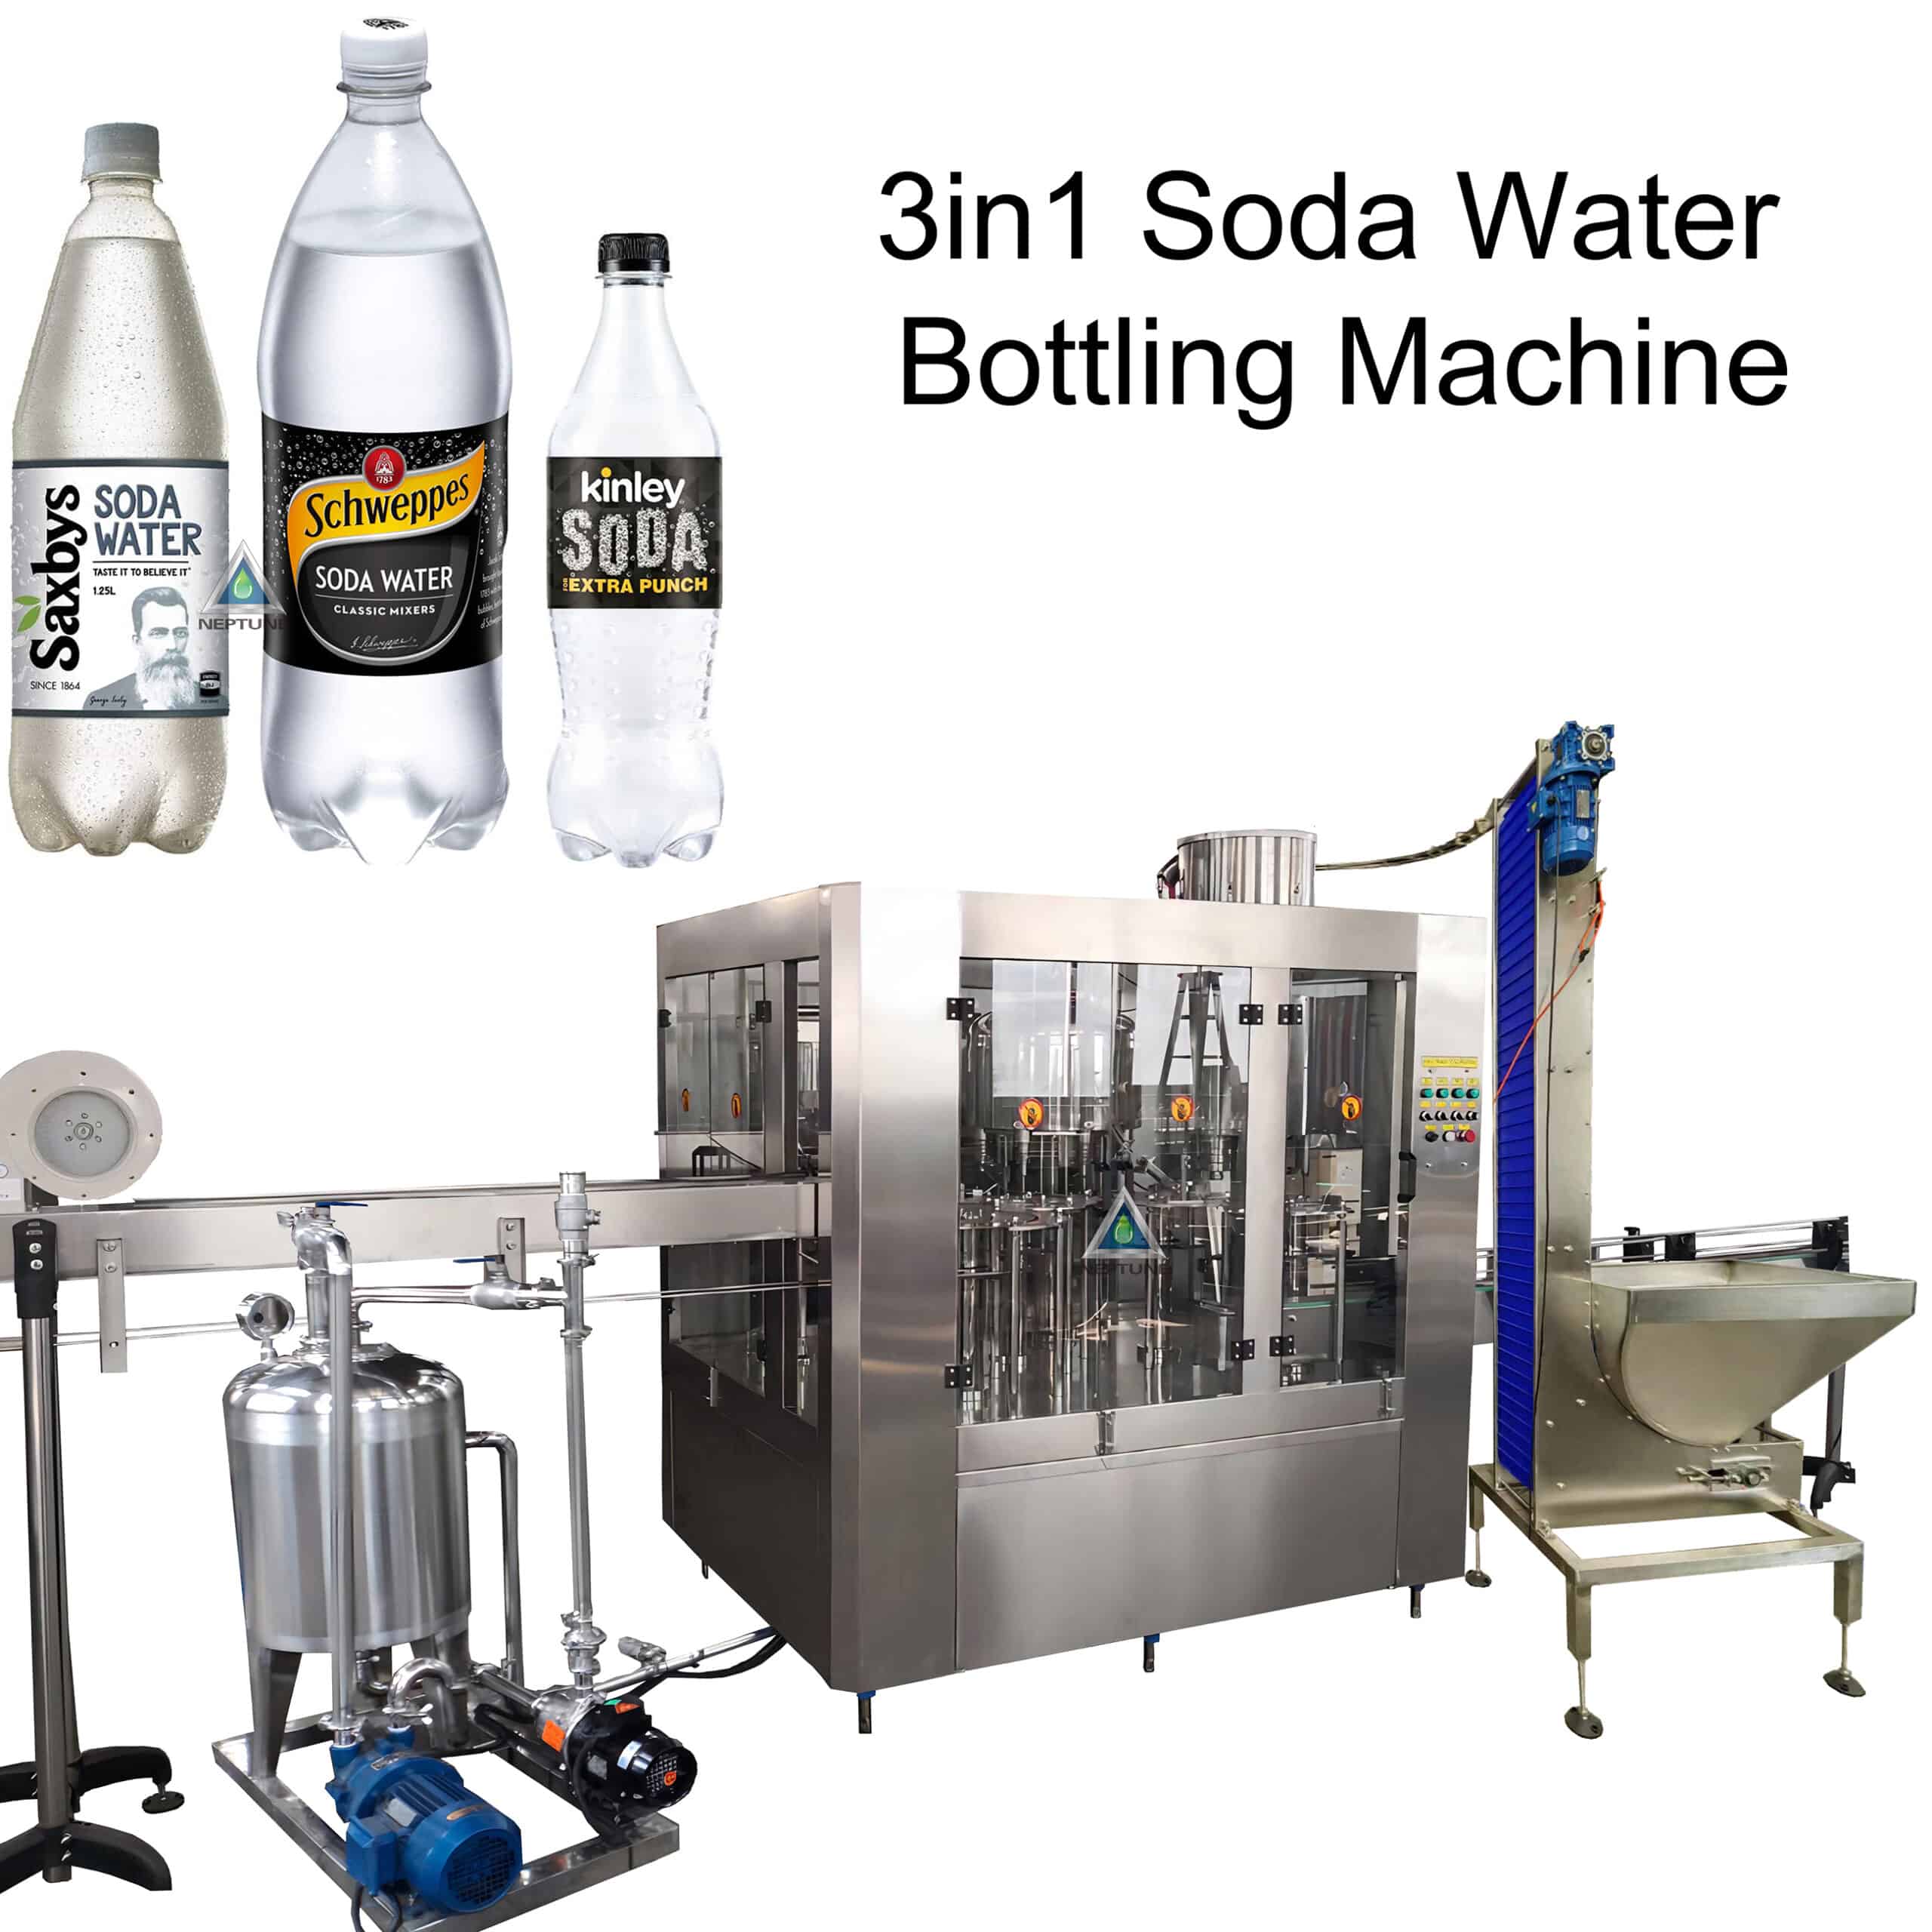 3in1 soda water bottling machine scaled